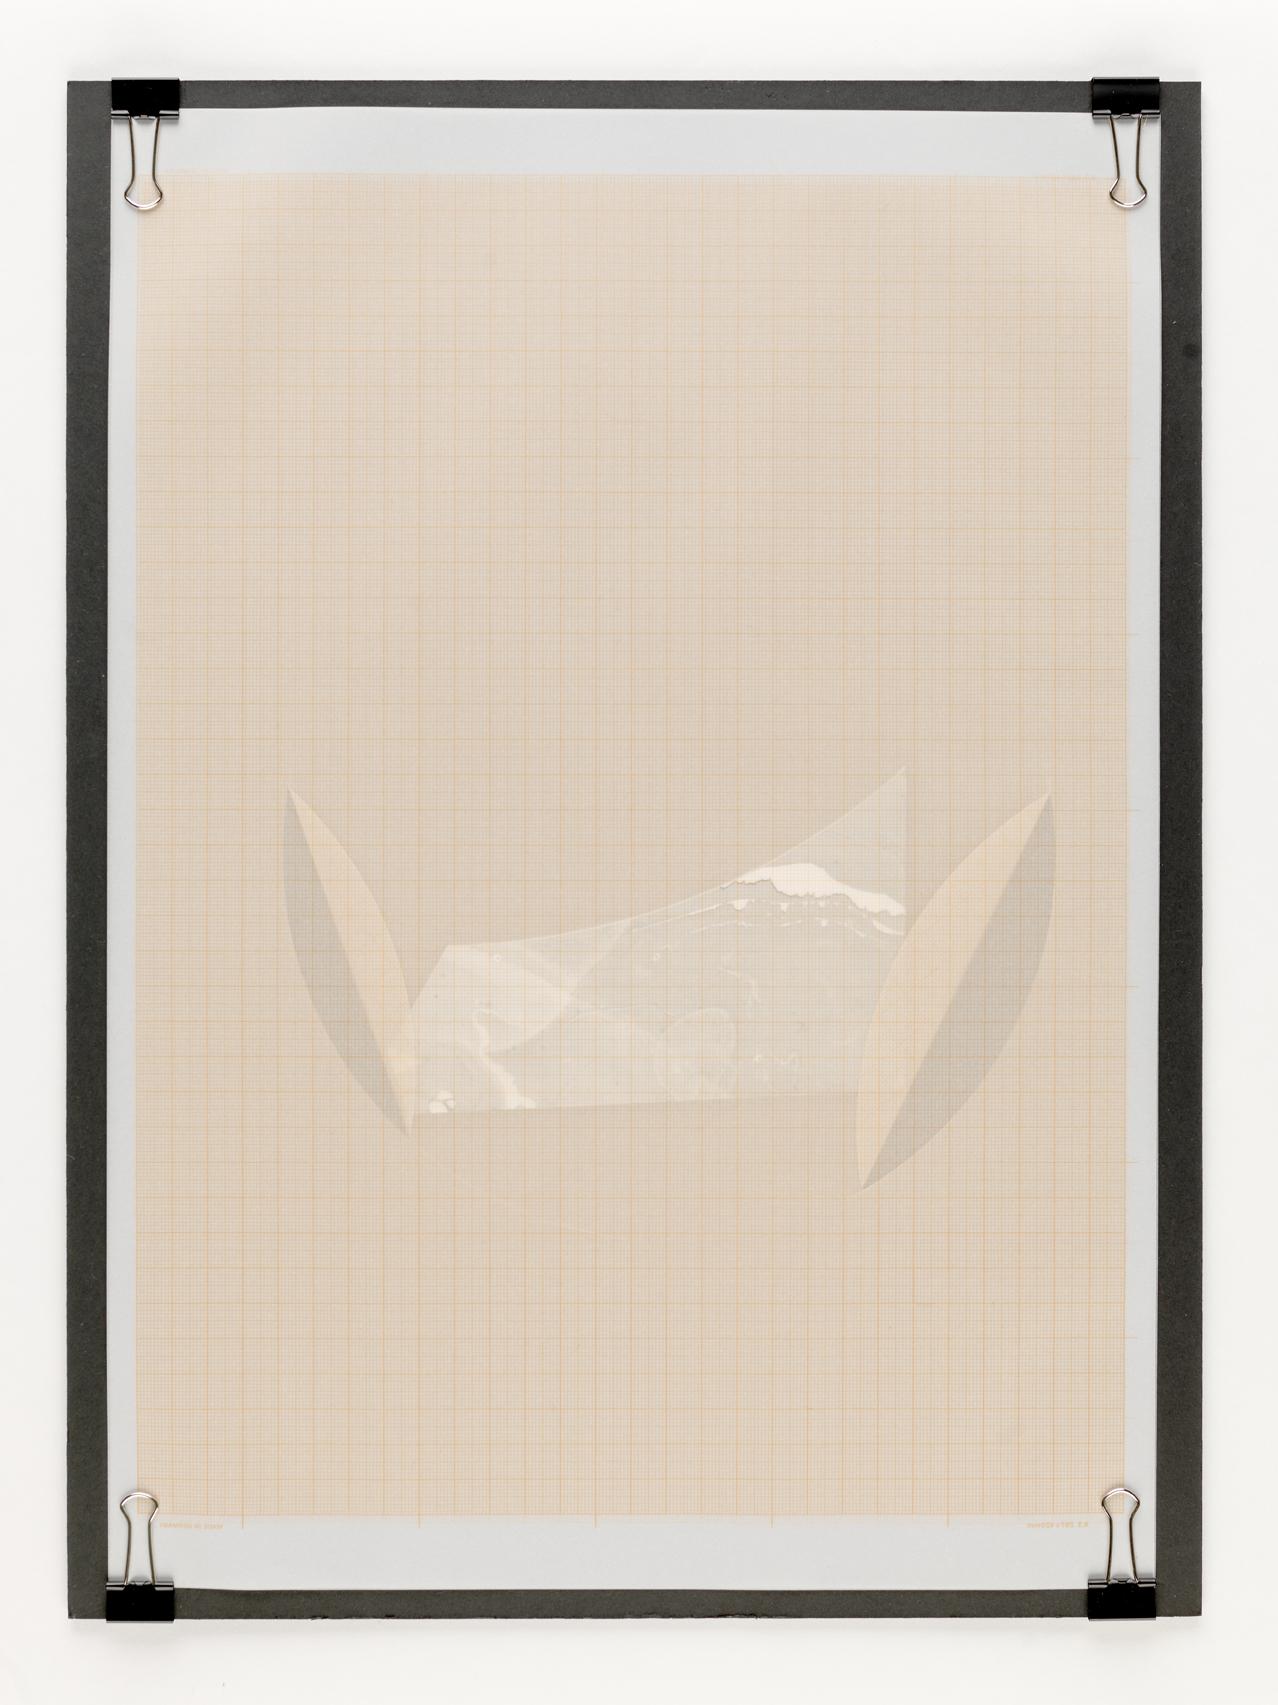 Chaos and Order 3 // Millimeterpapier, transparent // Karton // 43 x 32 cm // 2017